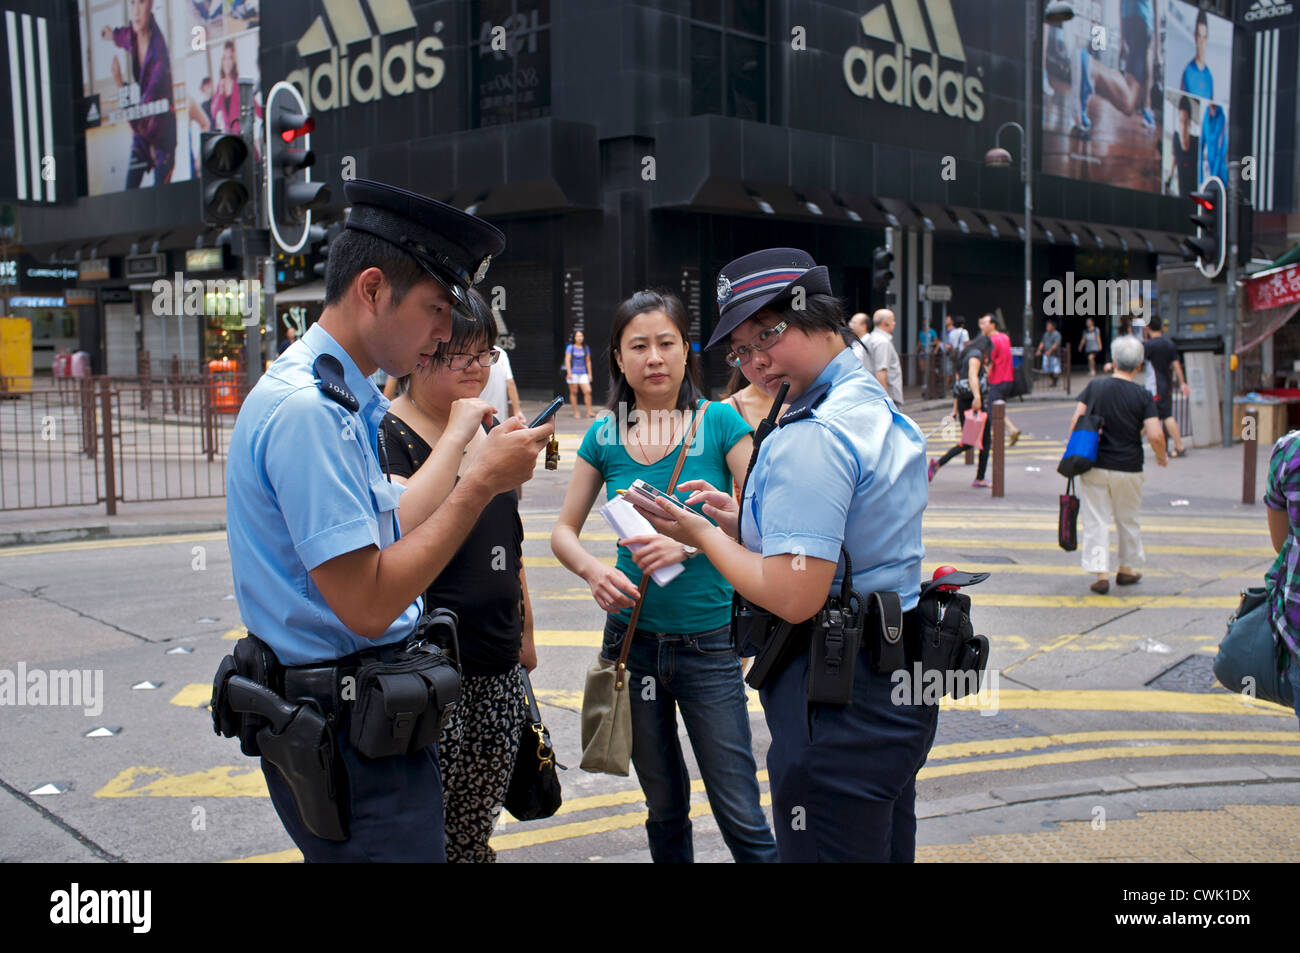 Hong Kong police patrolling on street. 25-Aug-2012 Stock Photo